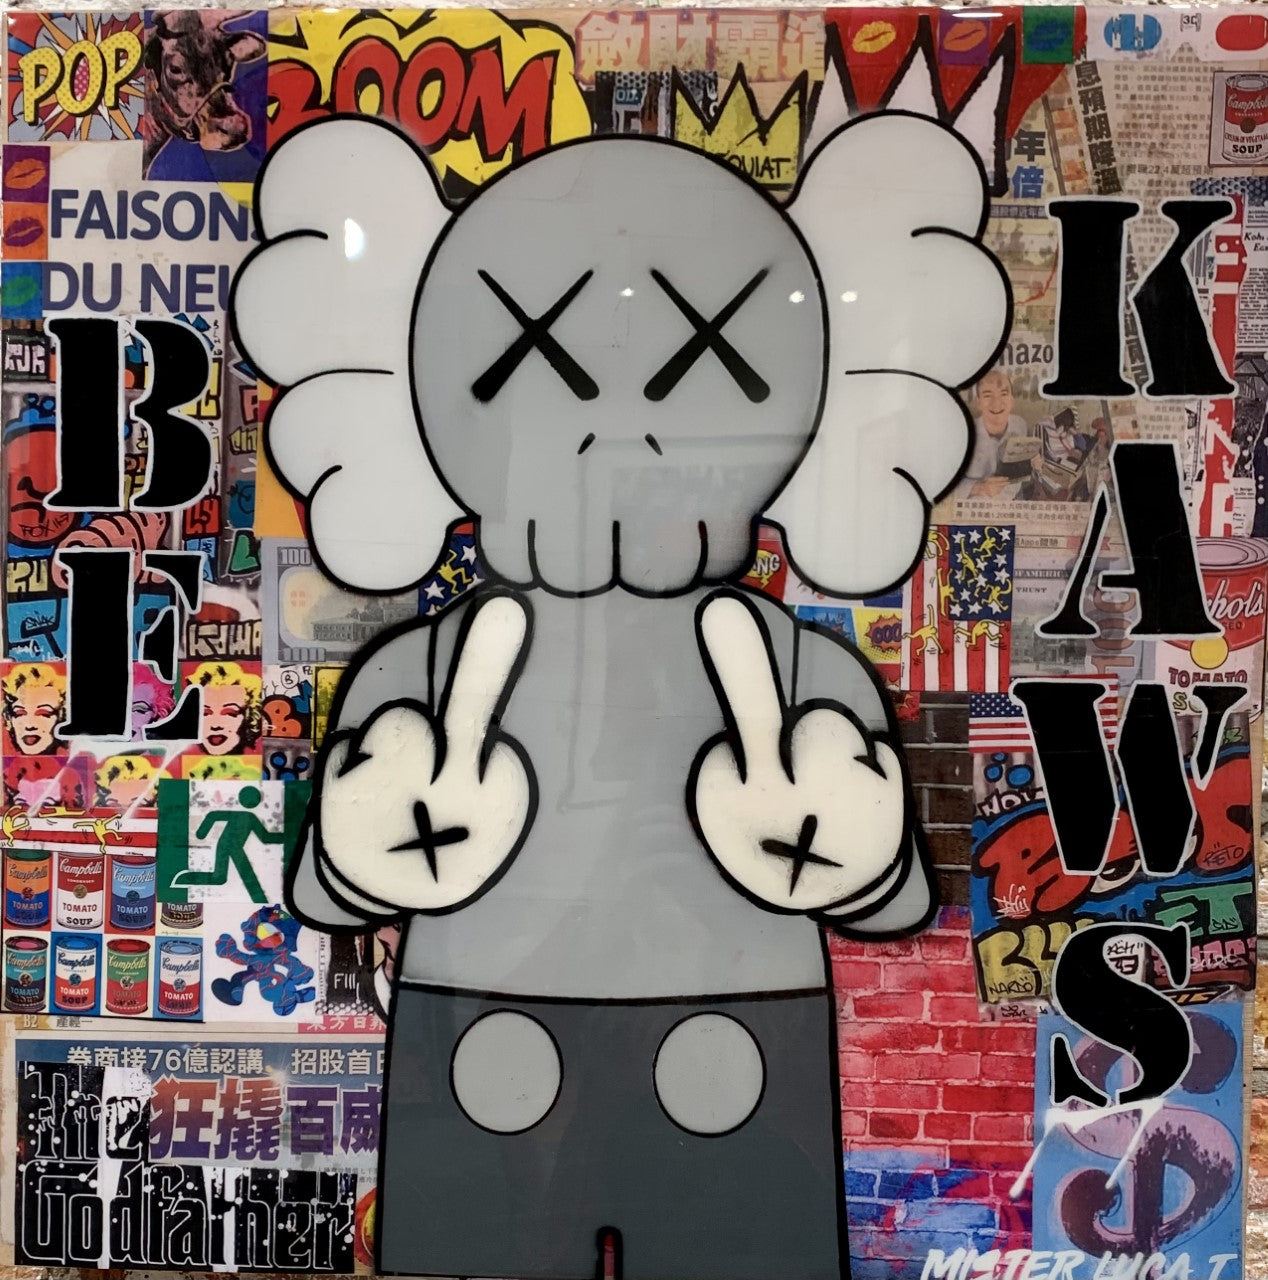 ▷ Rebellious Kaws 3D PopArt Box - Obey vs BearBrick by Koen Betjes, 2022, Painting